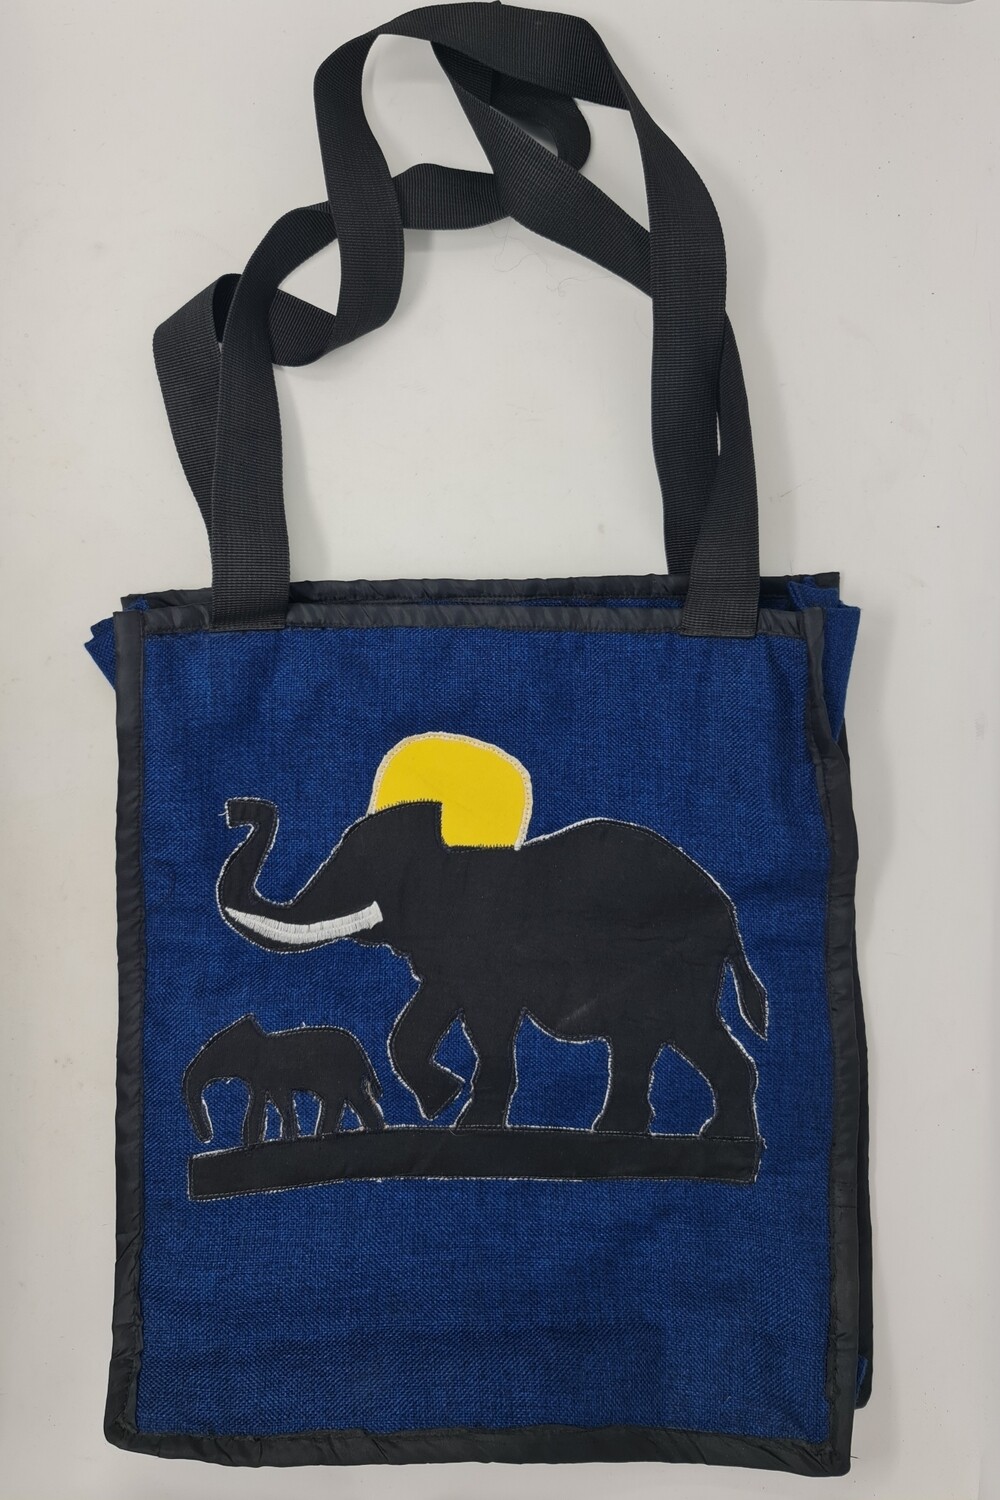 Asilia Tote Bag - Tembo na Mtoto Blue - Size 35cm x 41cm